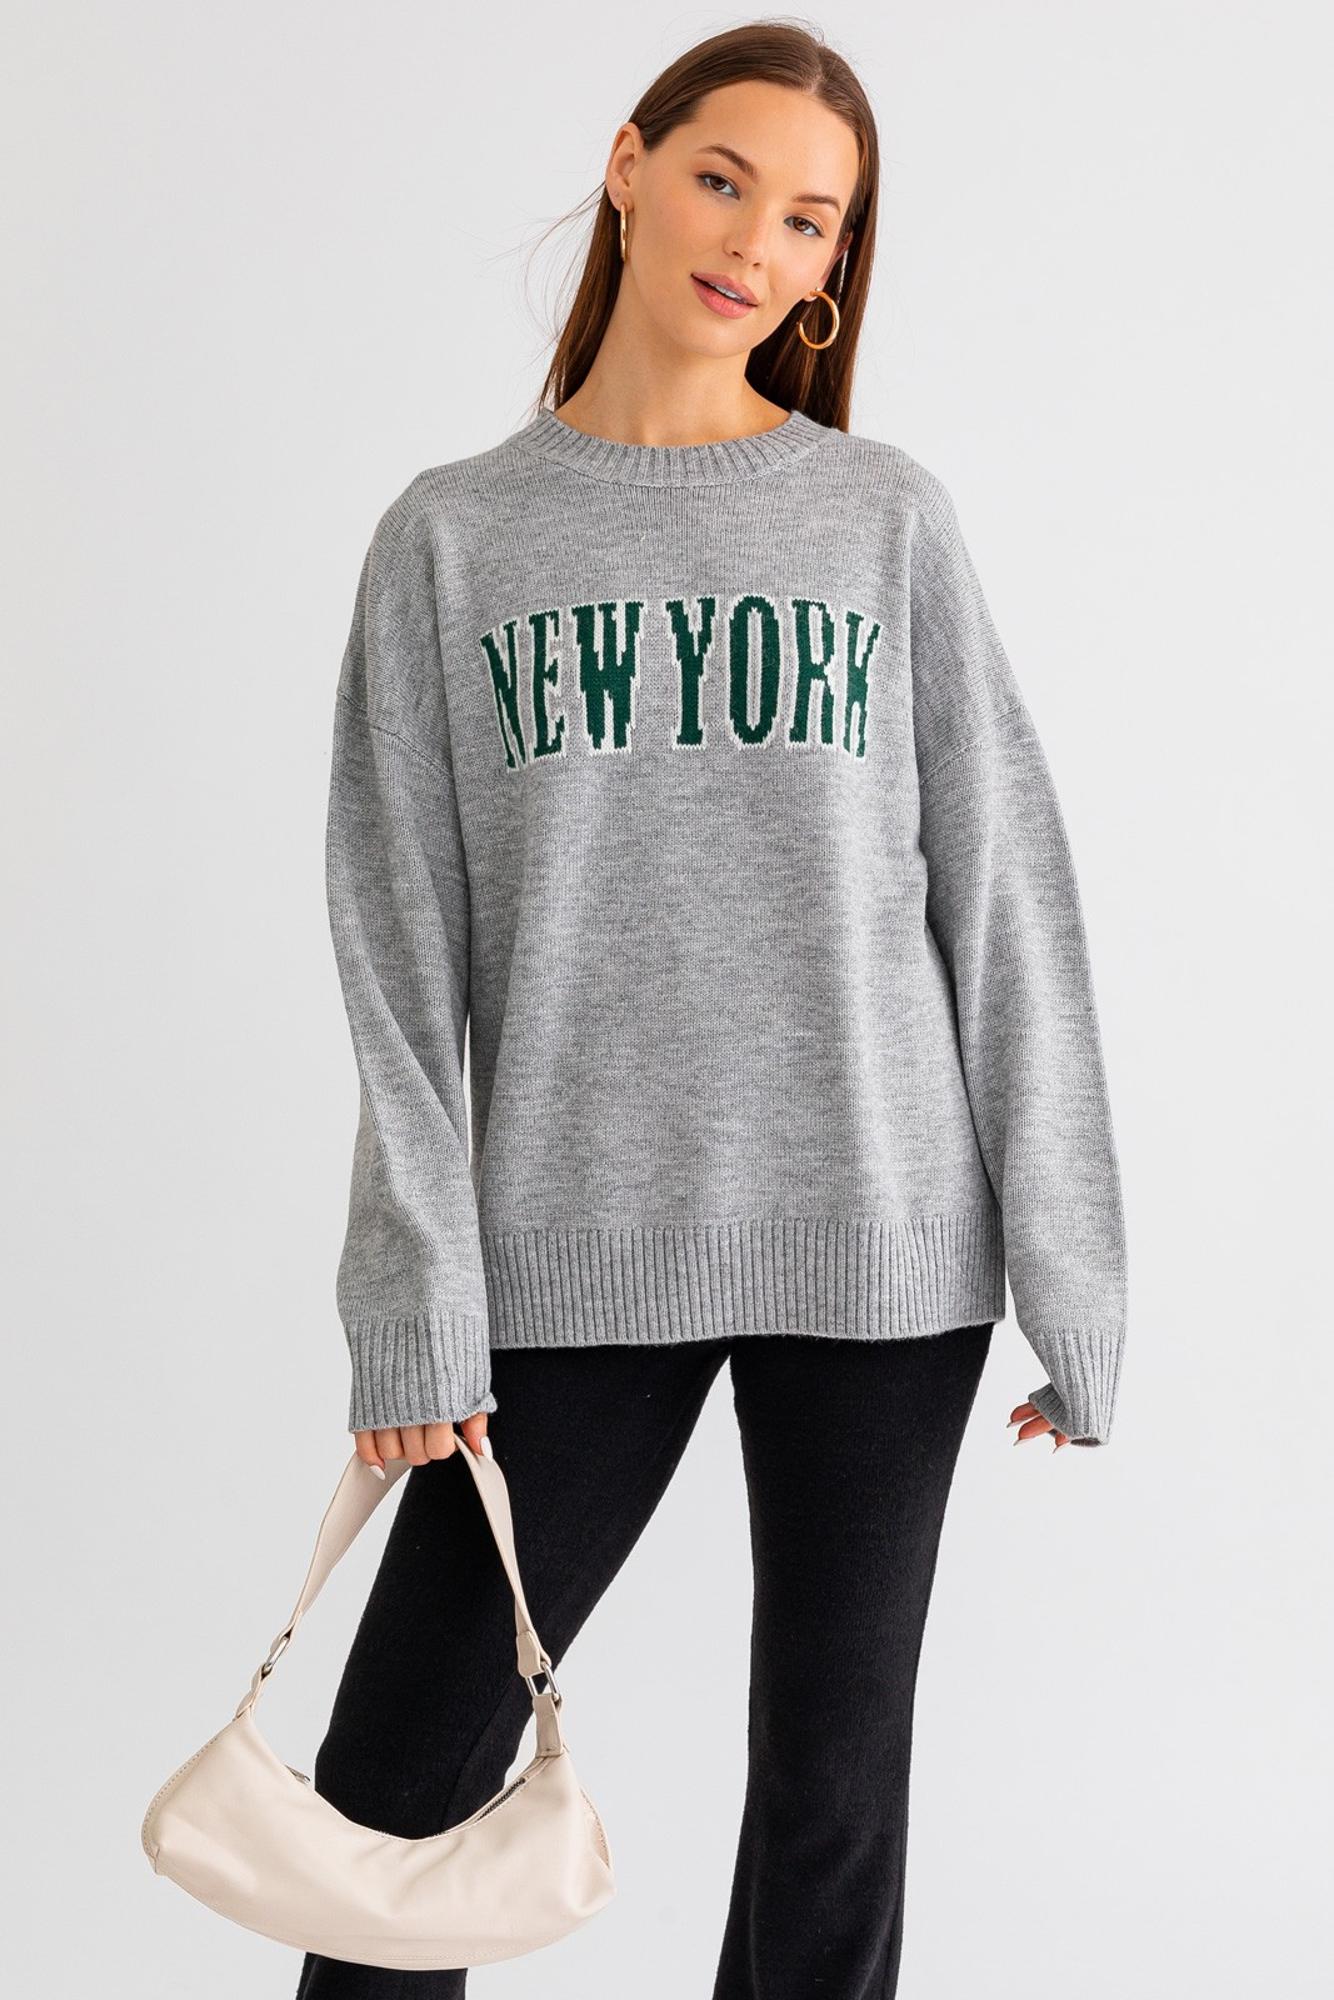 New York Long Sleeve Knit Sweater